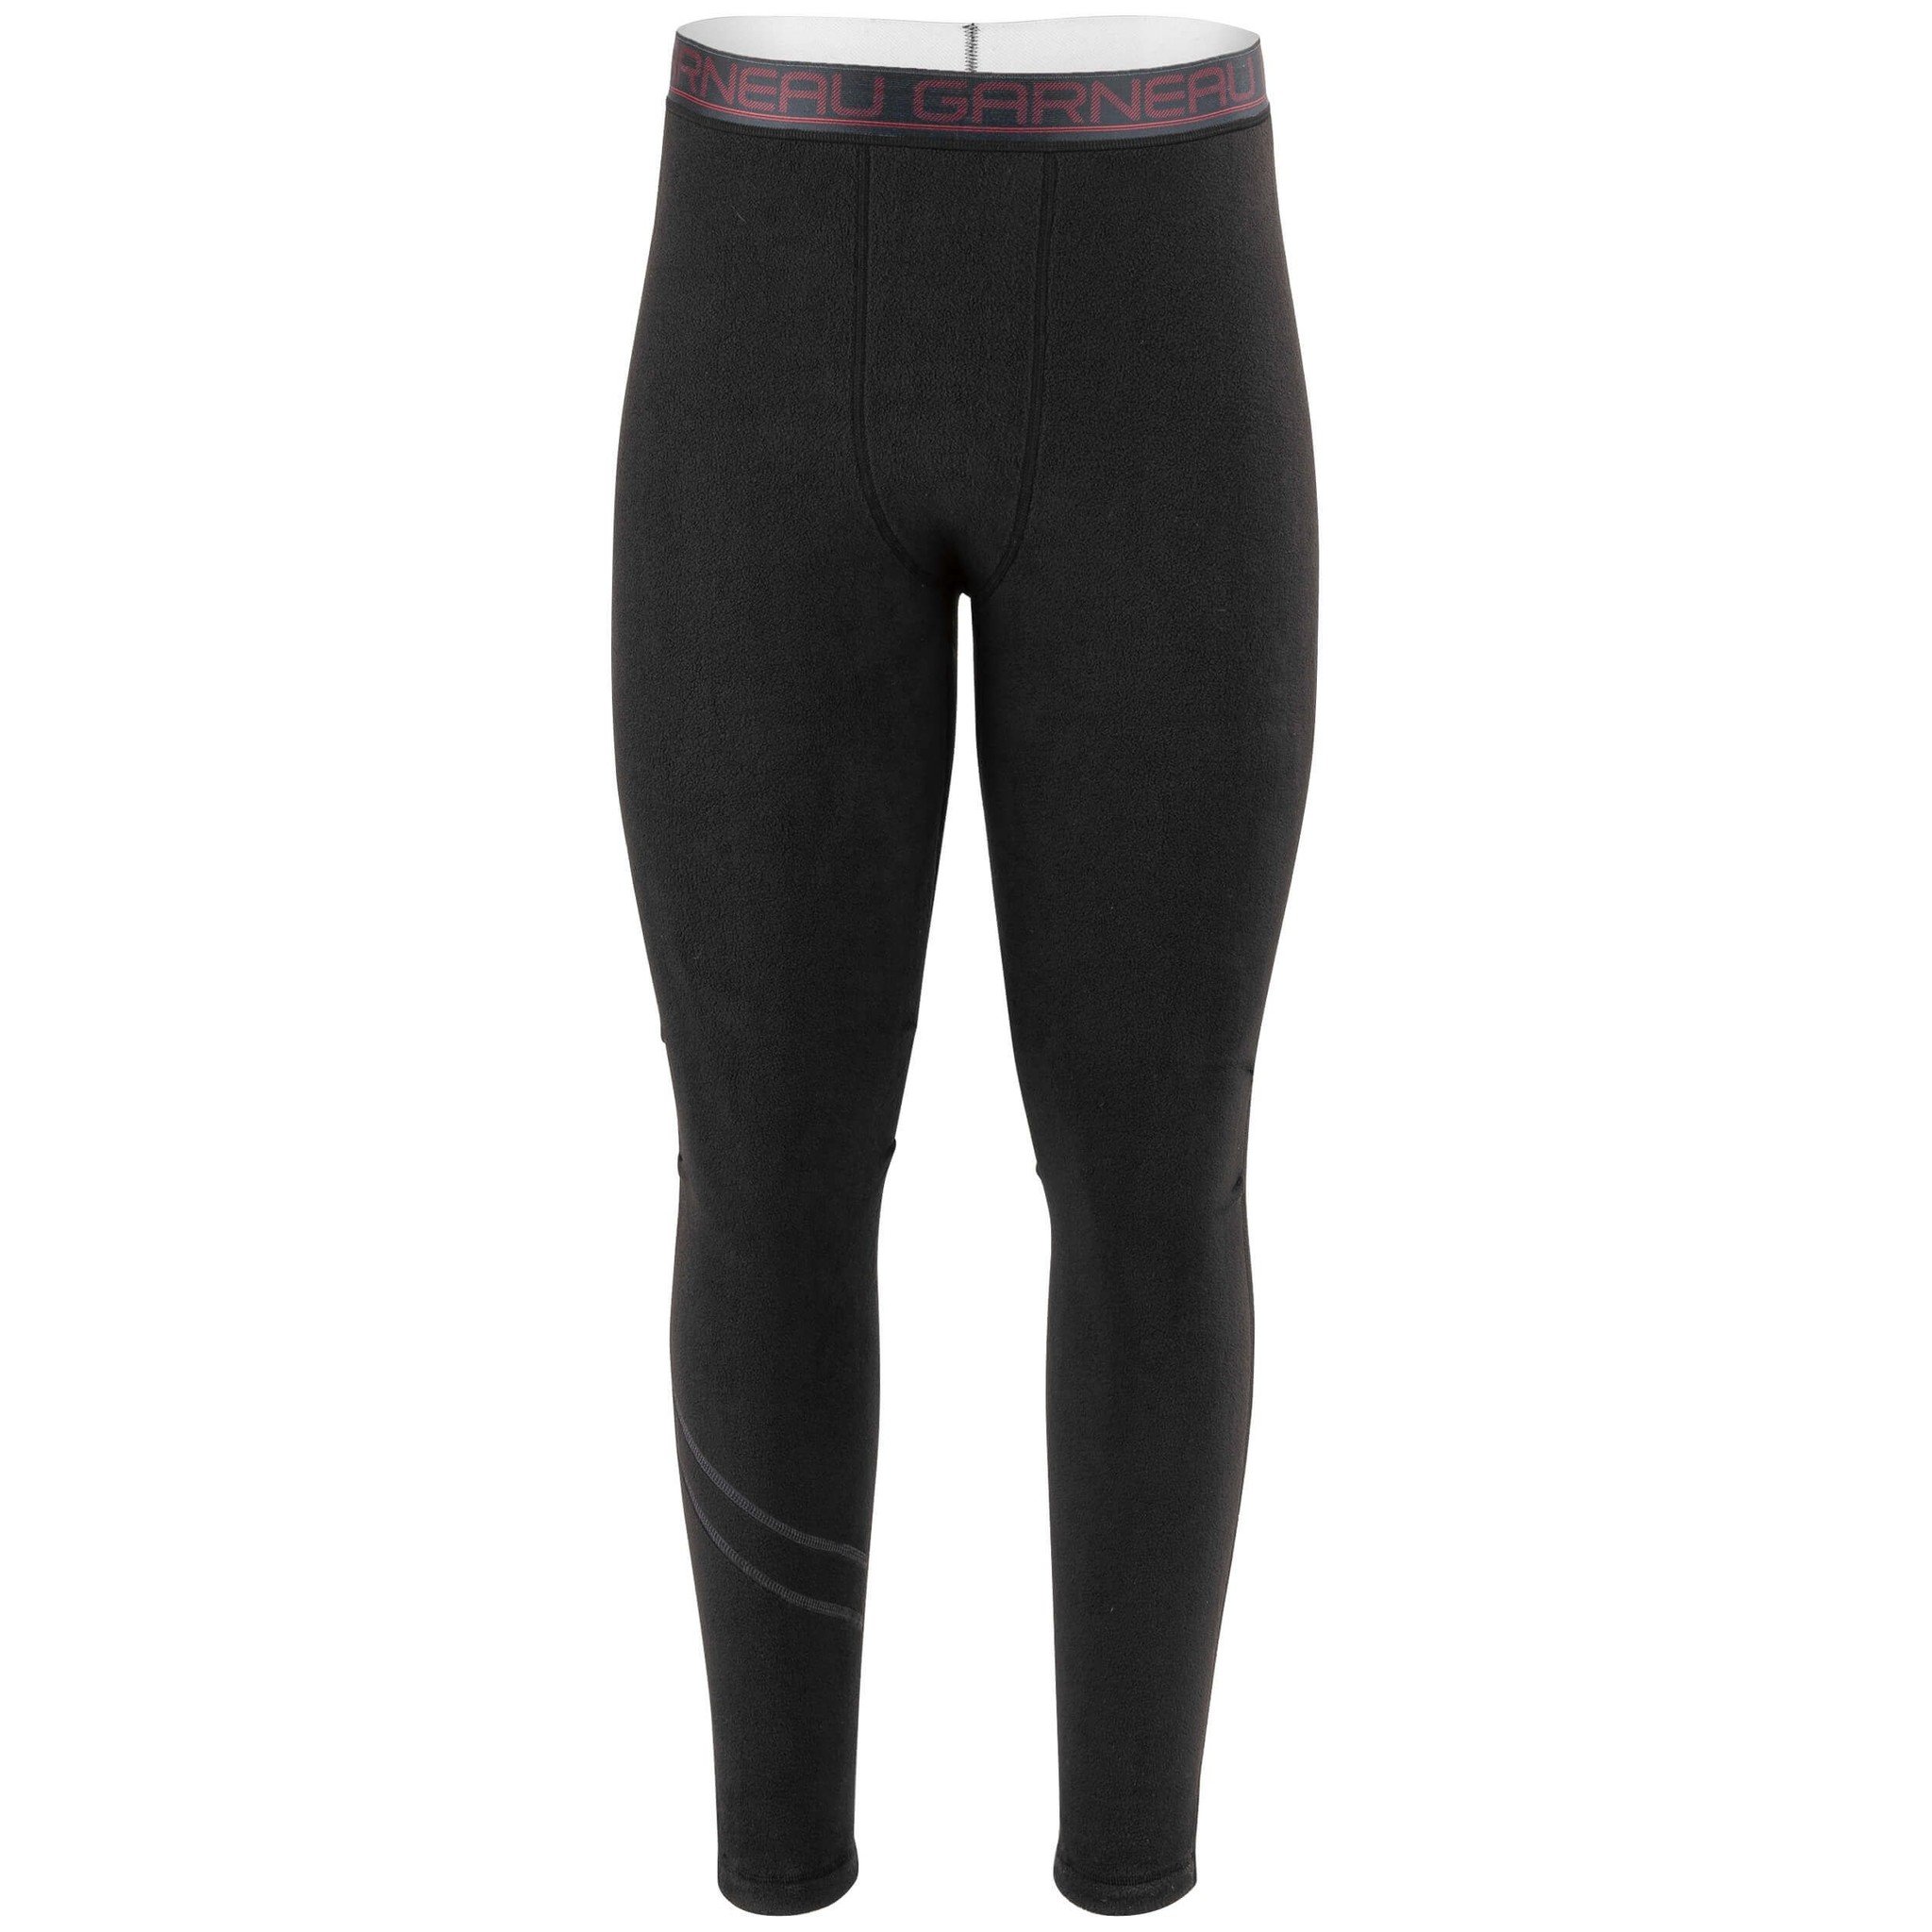 Helly Hansen Workwear Men's Lifa Max Thermal Base Layer Long Underwear Pants  - Navy